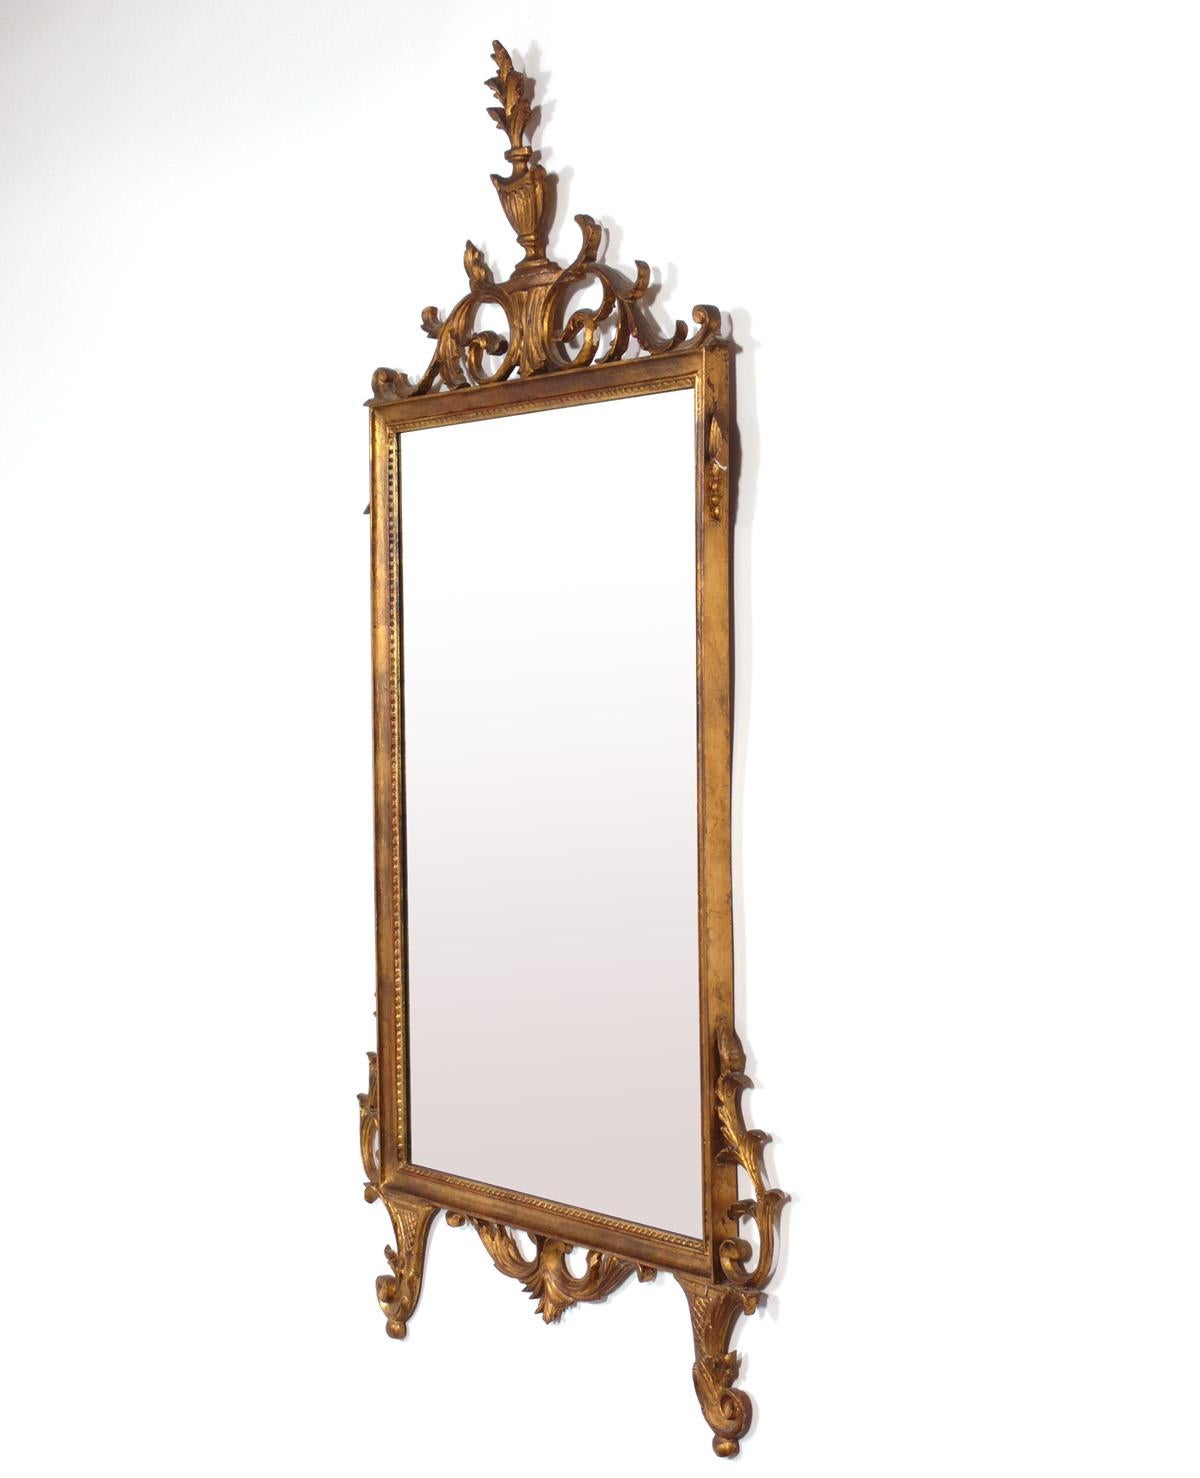 Ornate gilt mirror, Italian, circa 1950s. Retains warm original patina to both the gilt wood frame and the original mirrored glass.